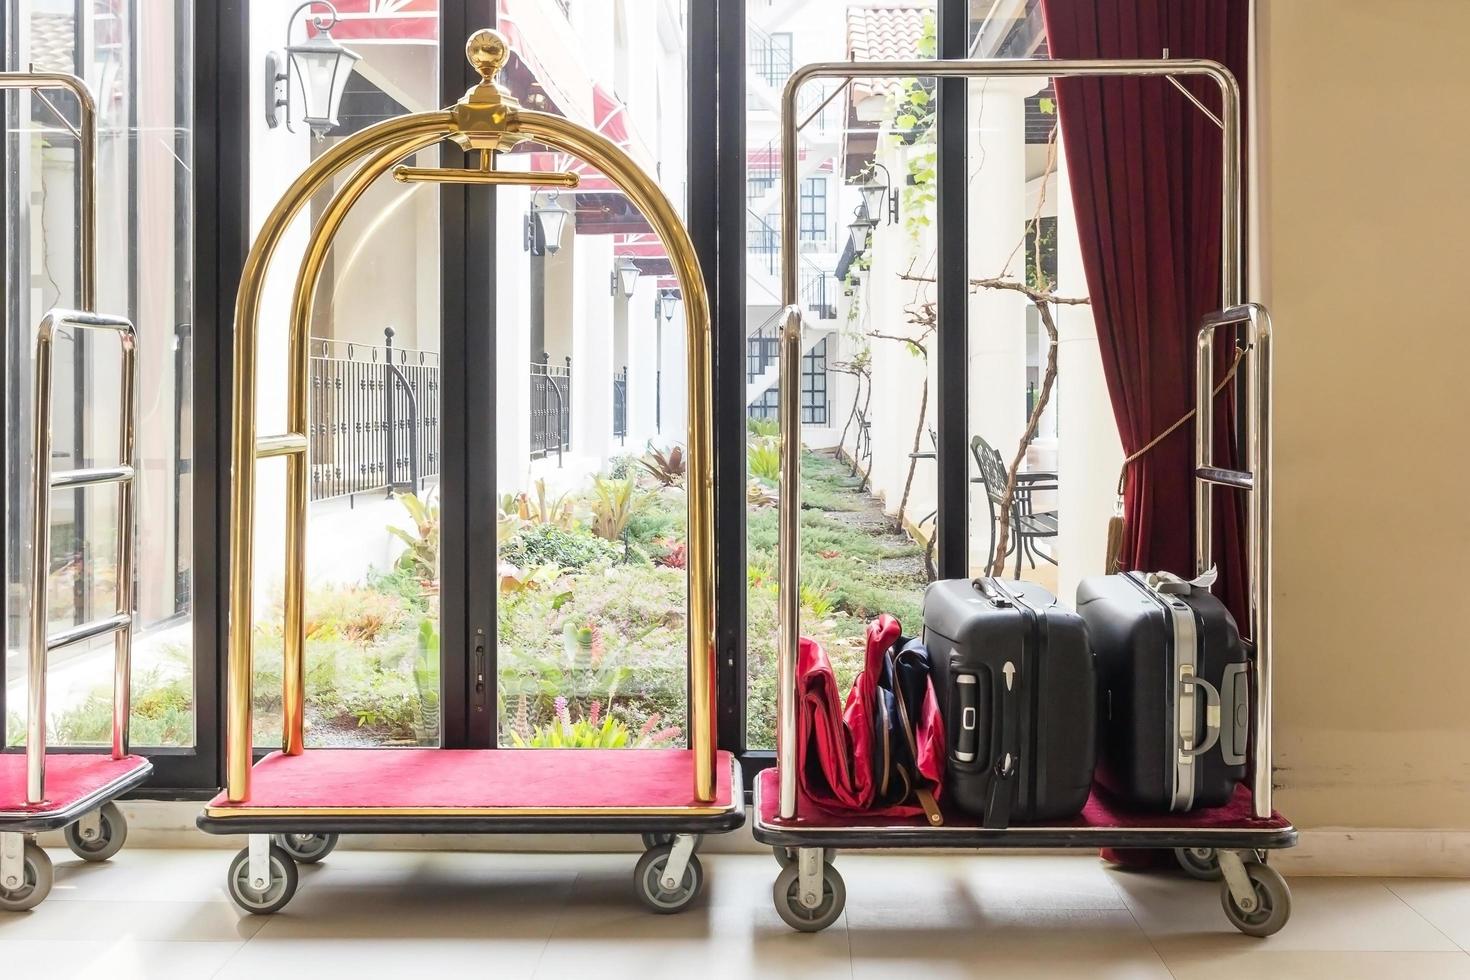 Hotel luggage carts near window photo